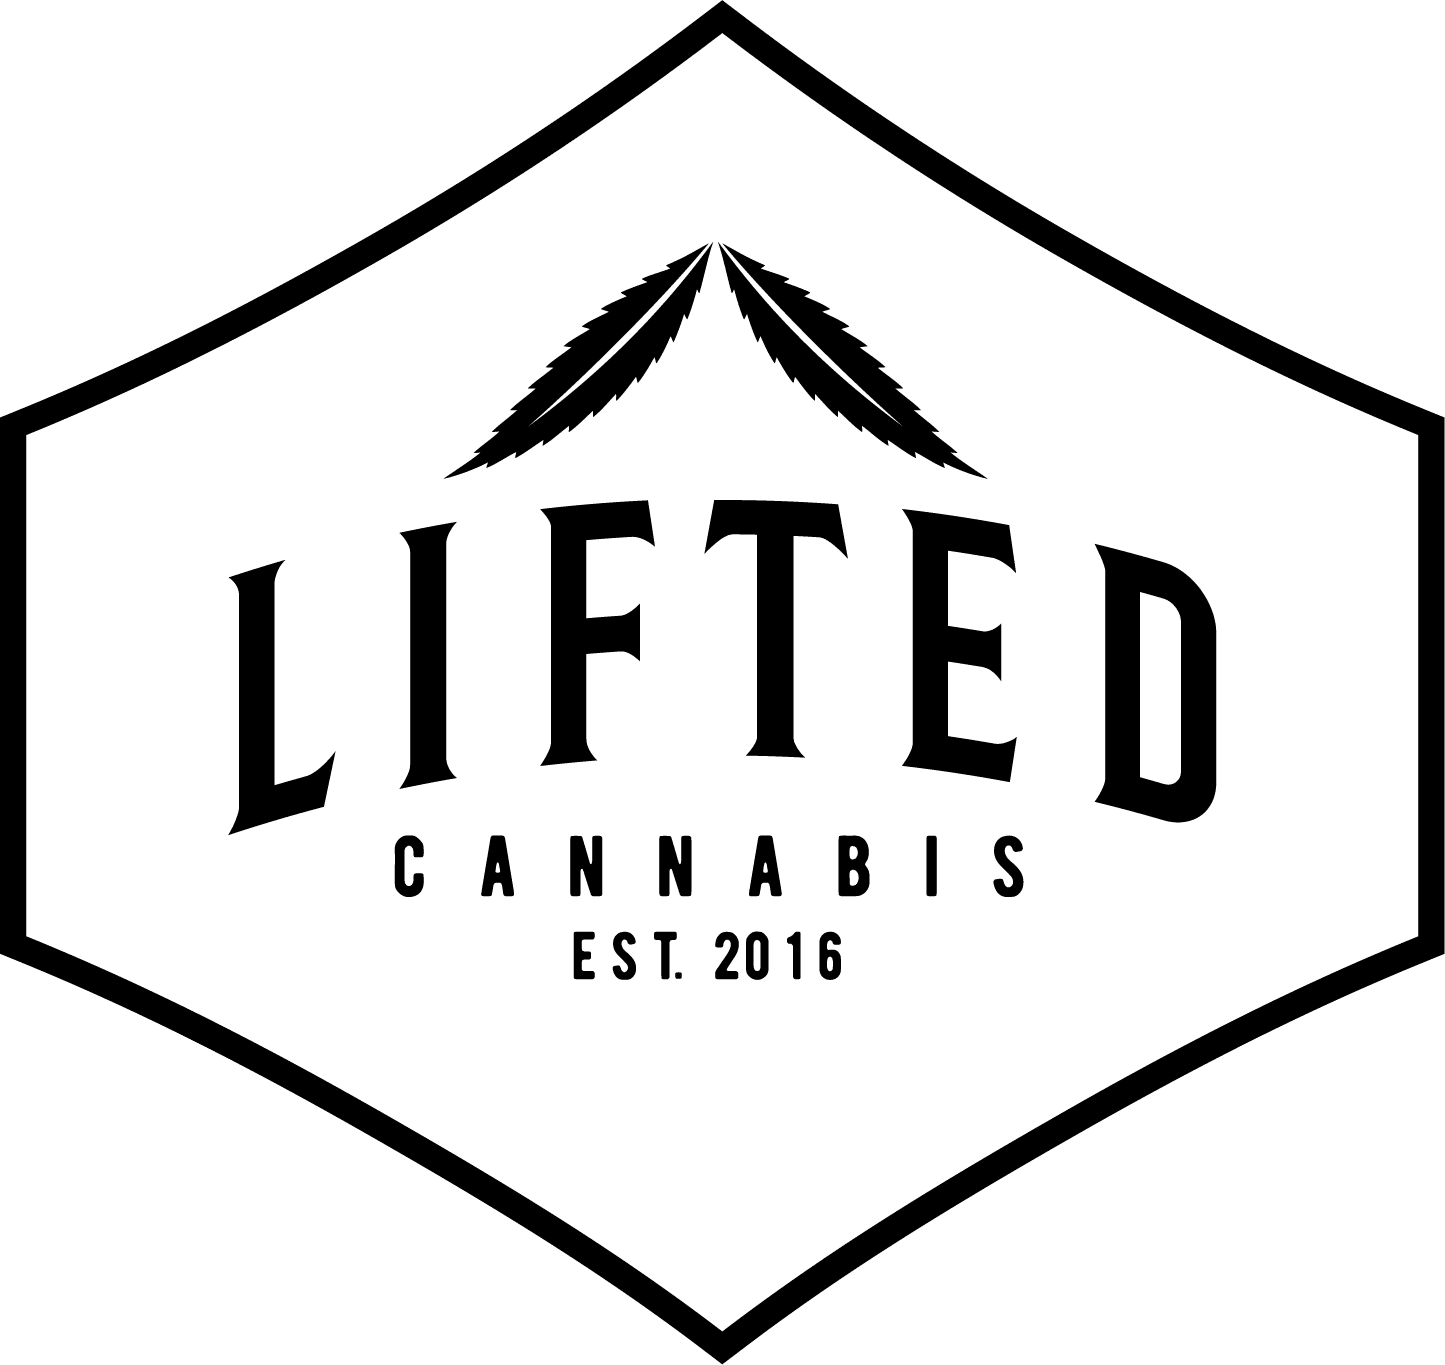 Lifted Cannabis